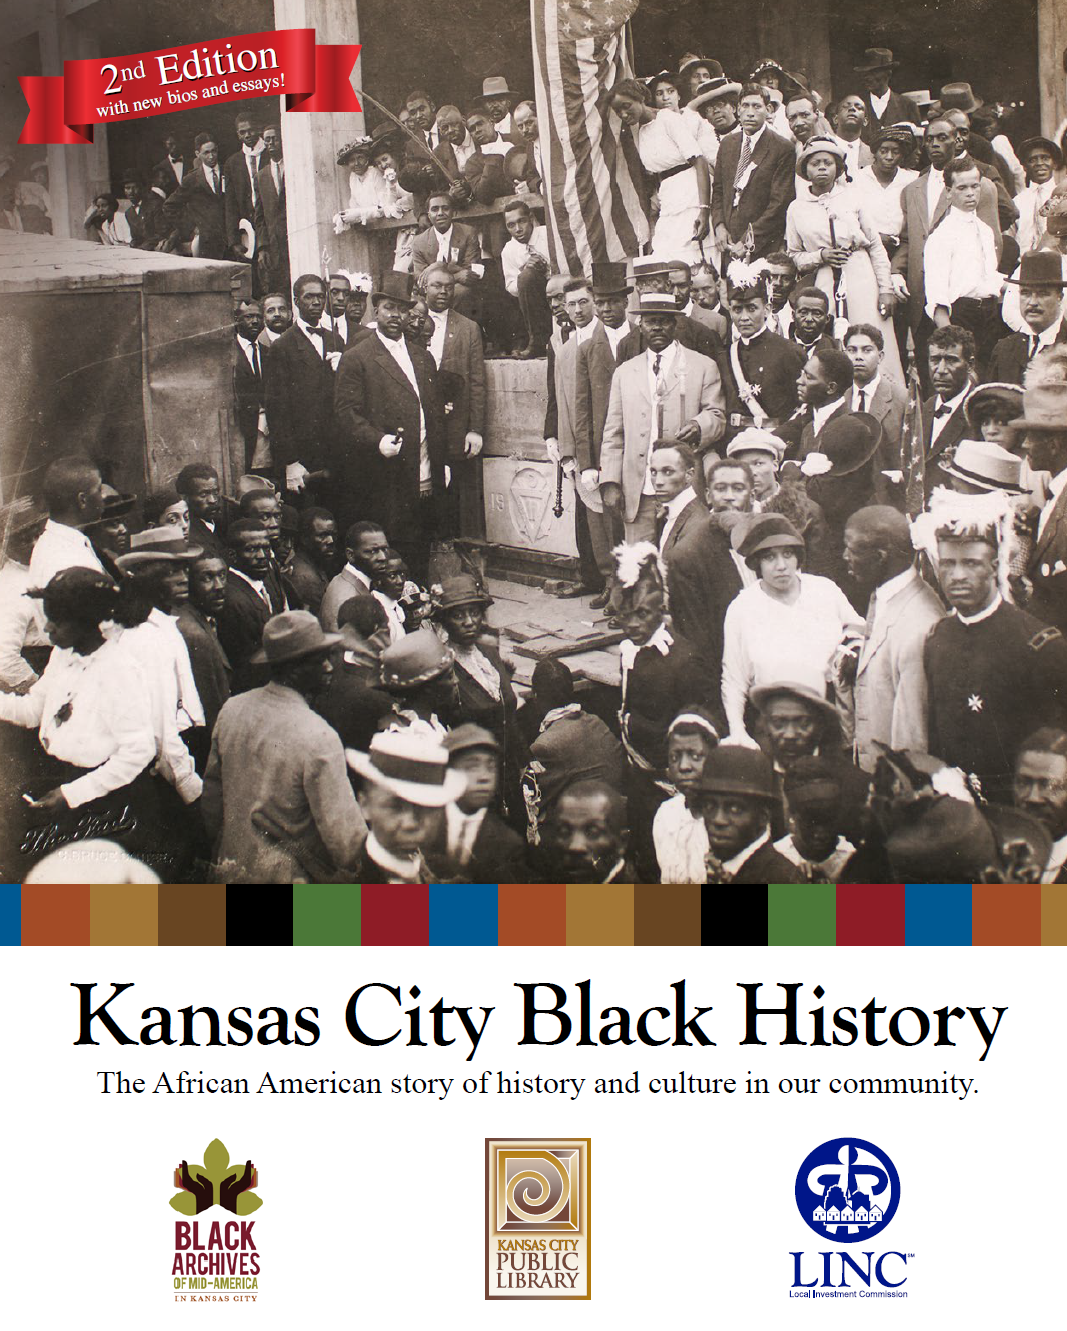 Kansas City Black History booklet